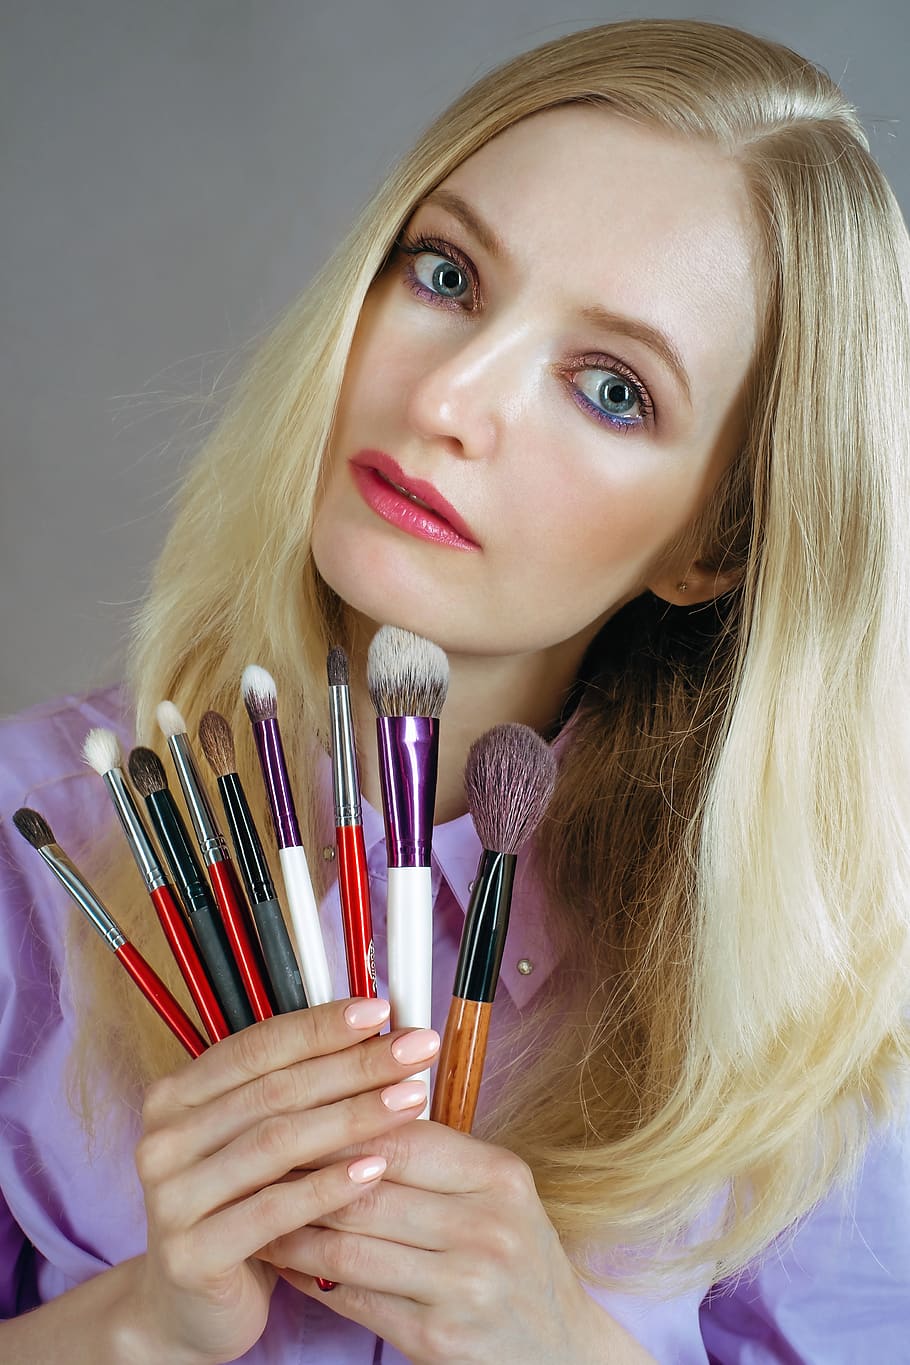 makeup artist, brush, girl, blonde, makeup, muah, highlighter, powder, cosmetics, eyeshadow